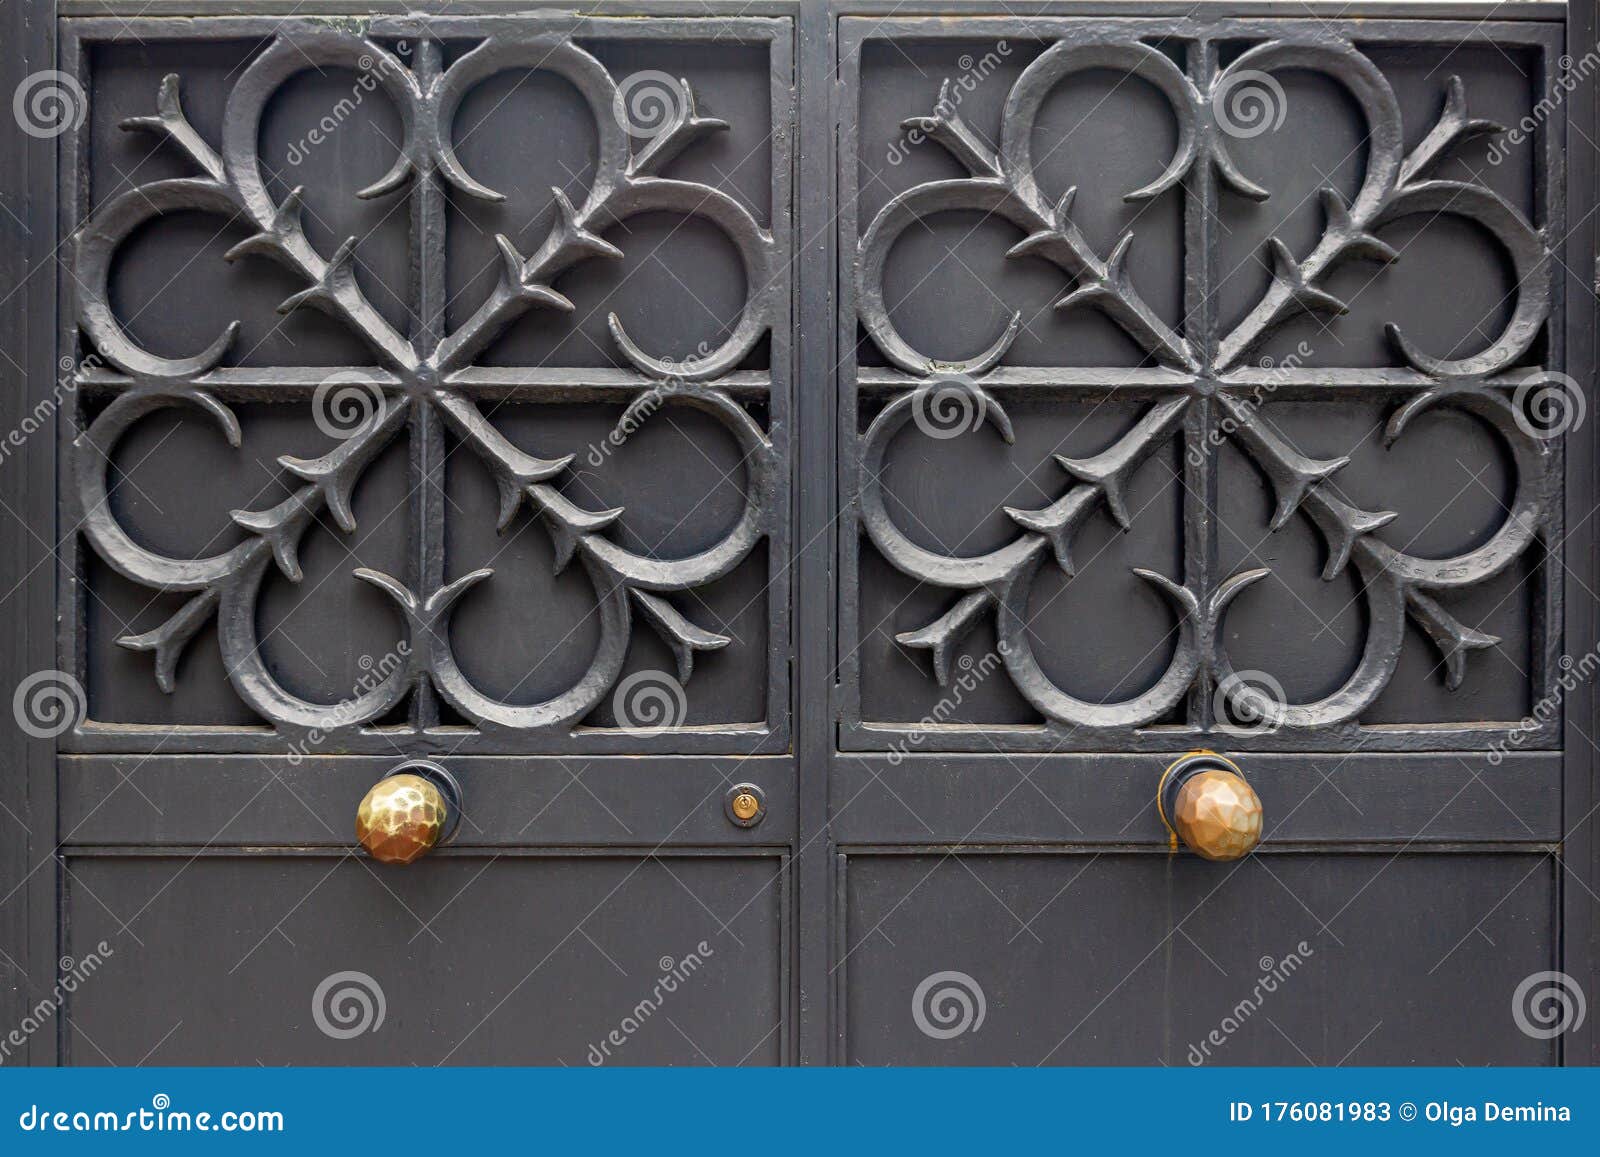 Steel, Iron Door Ancient Architectural Design. the Metal Gate ...